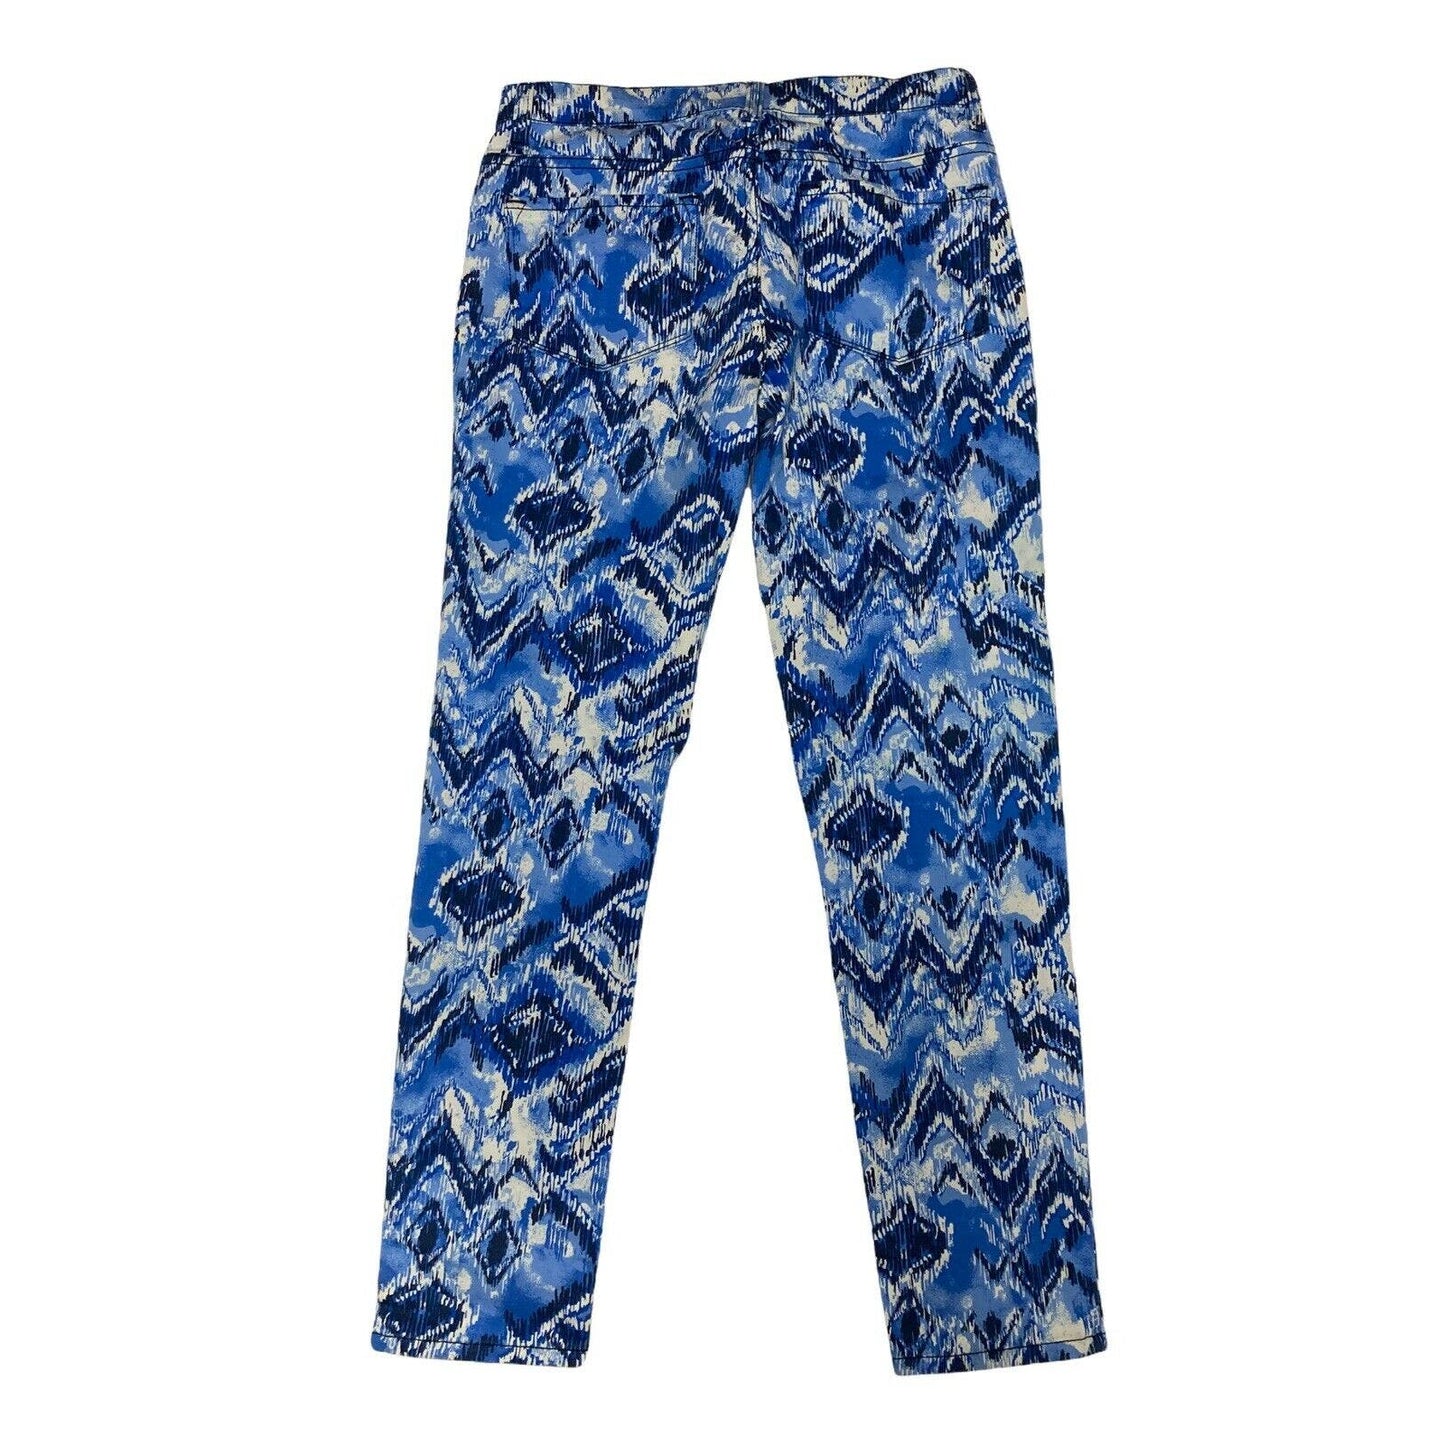 Francesca’s Collection Ikat Blue White Skinny Pants Size 29 Style FR001T2